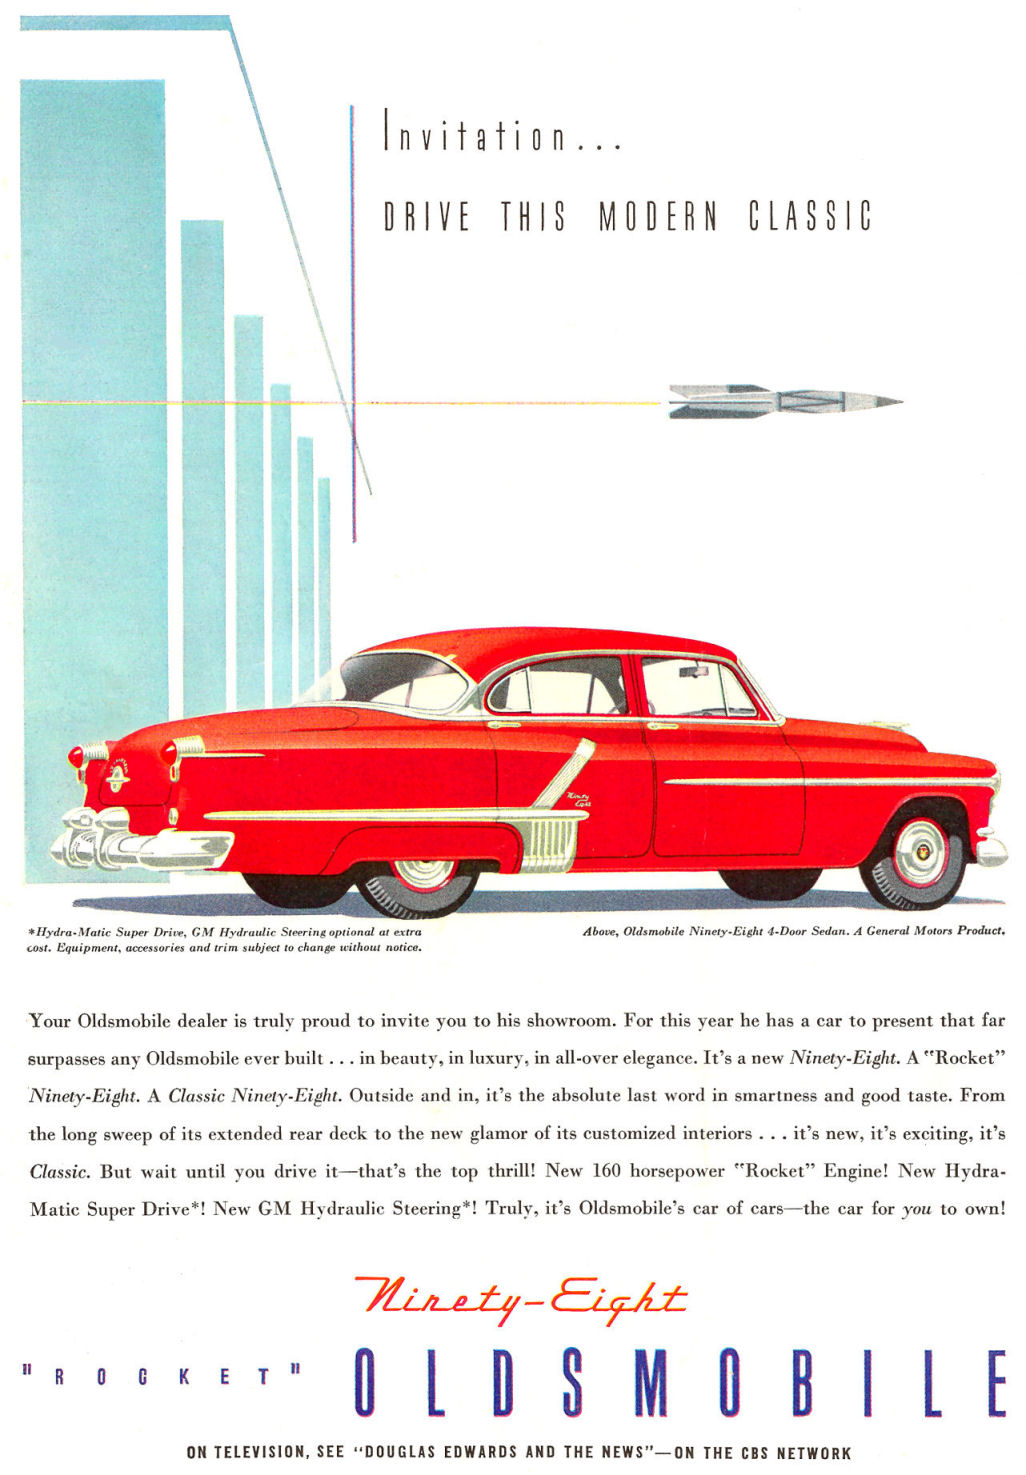 1952 American Auto Advertising